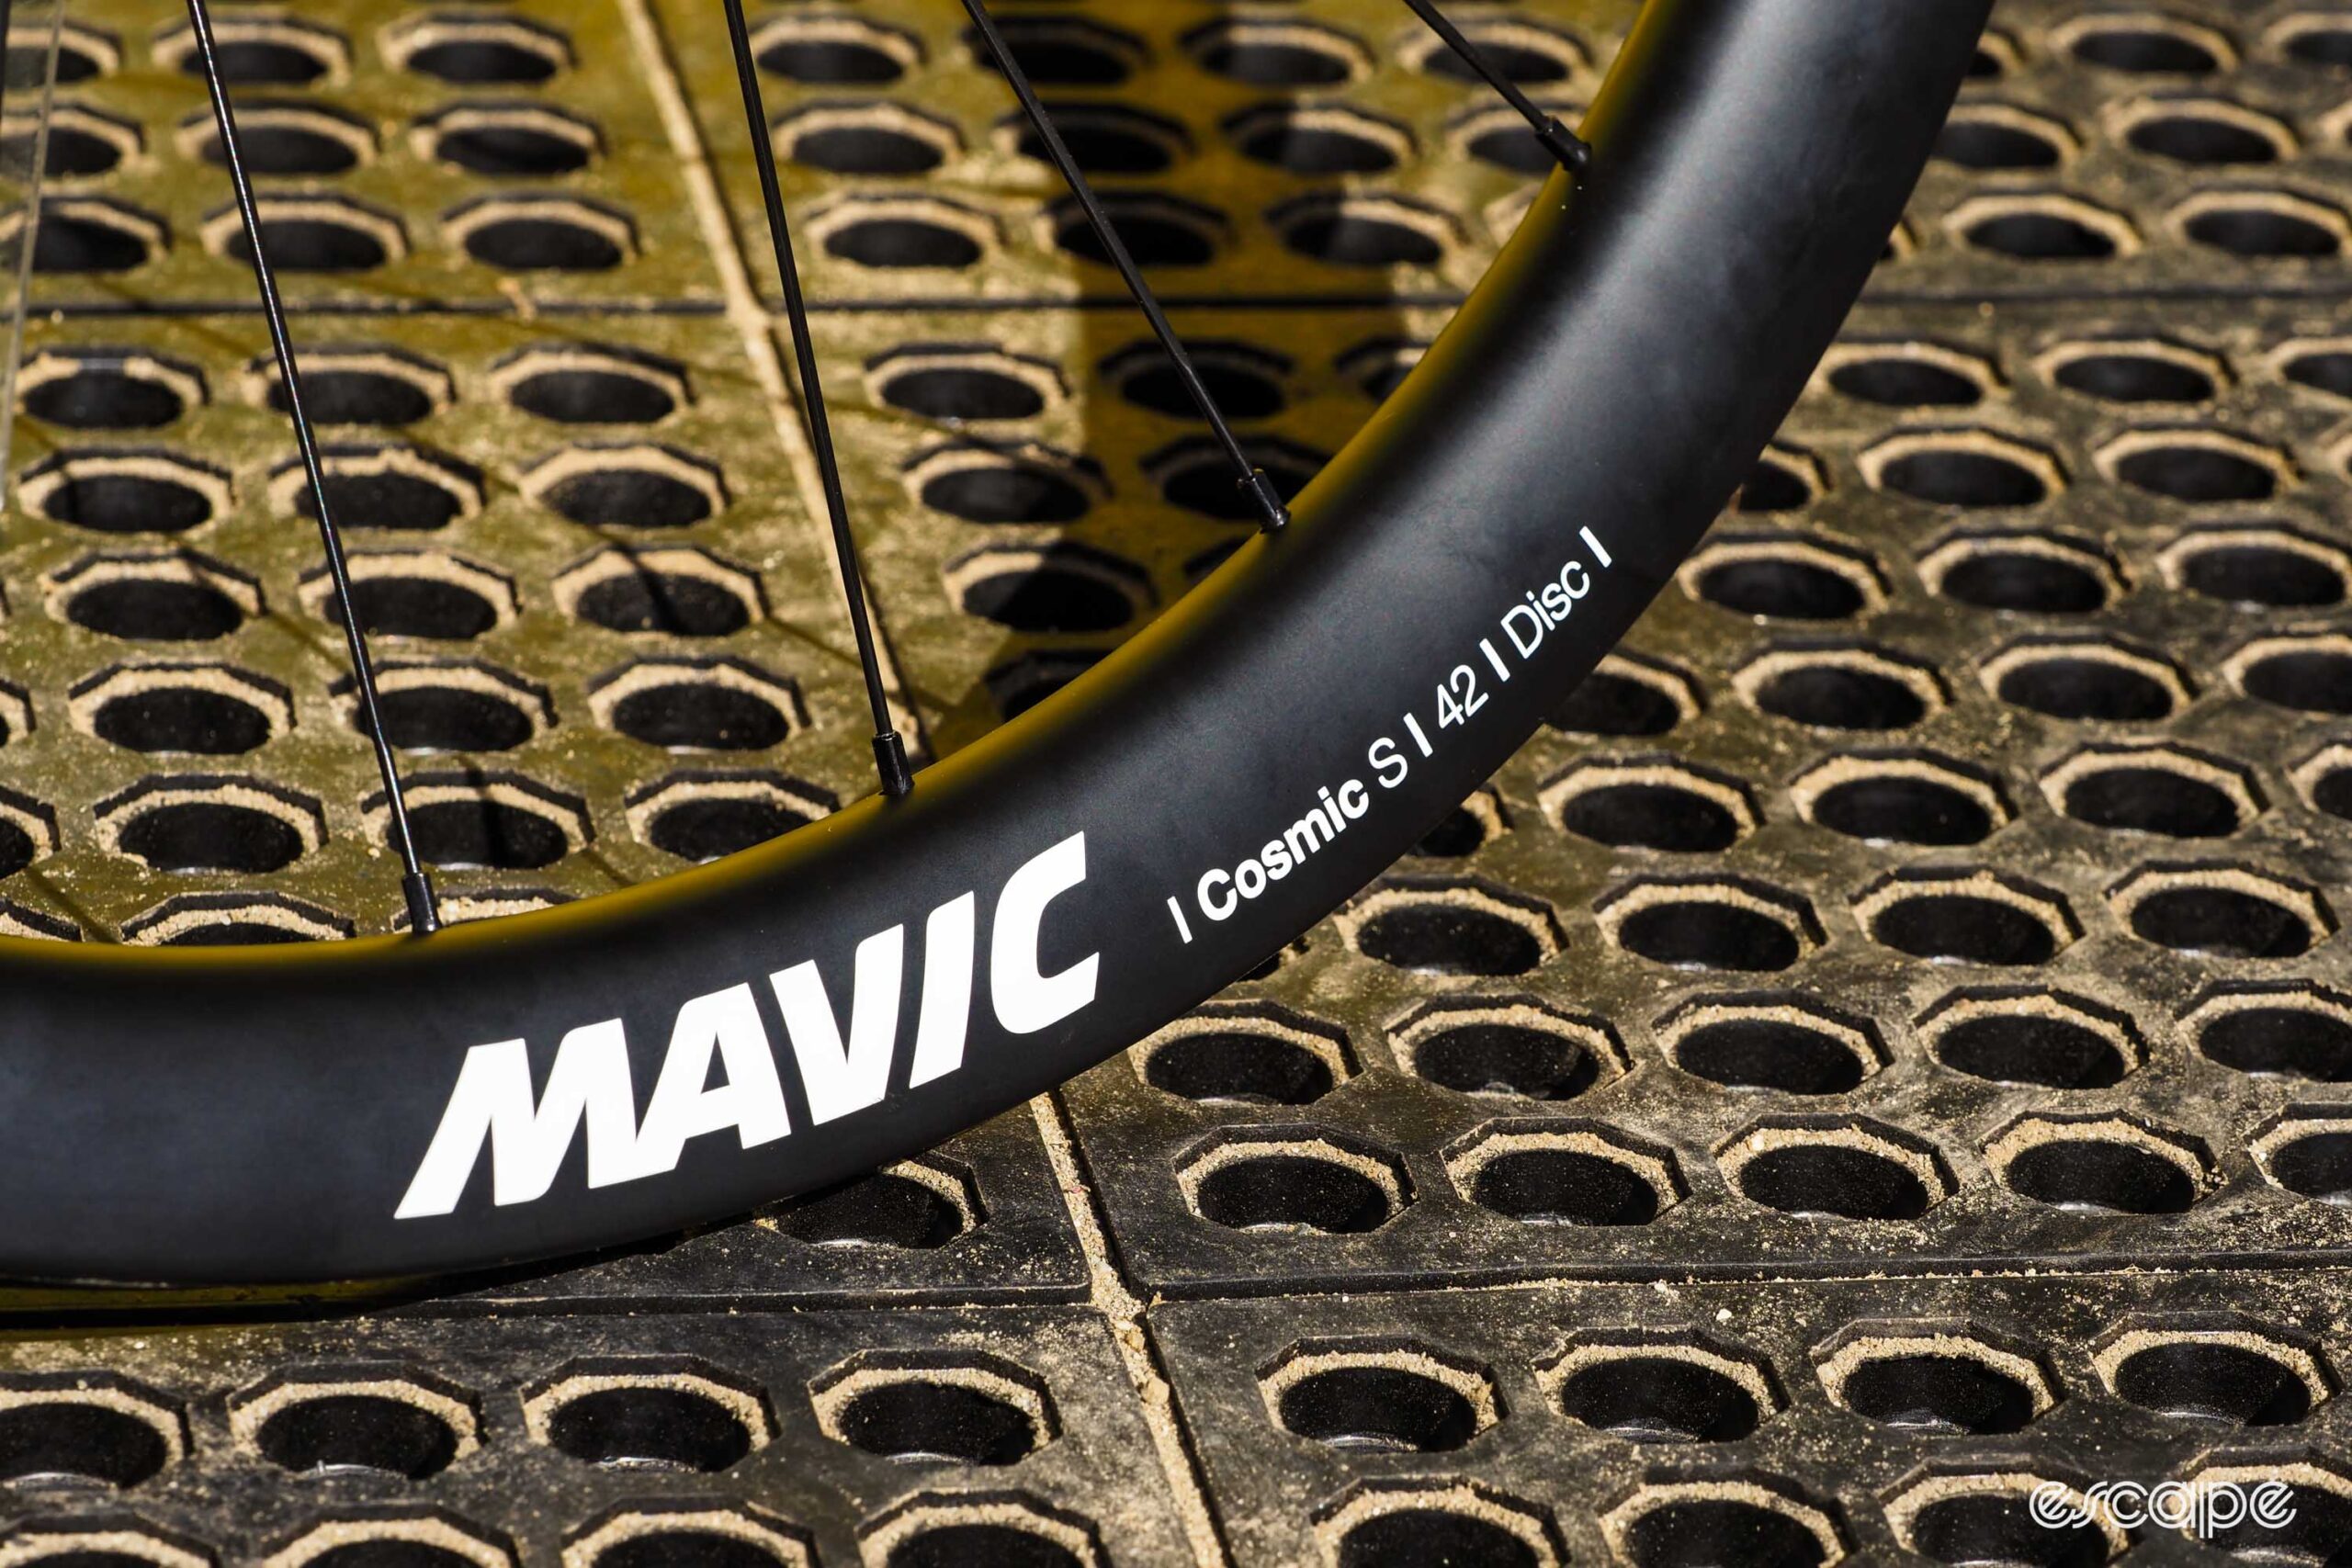 Mavic Cosmic S carbon wheels